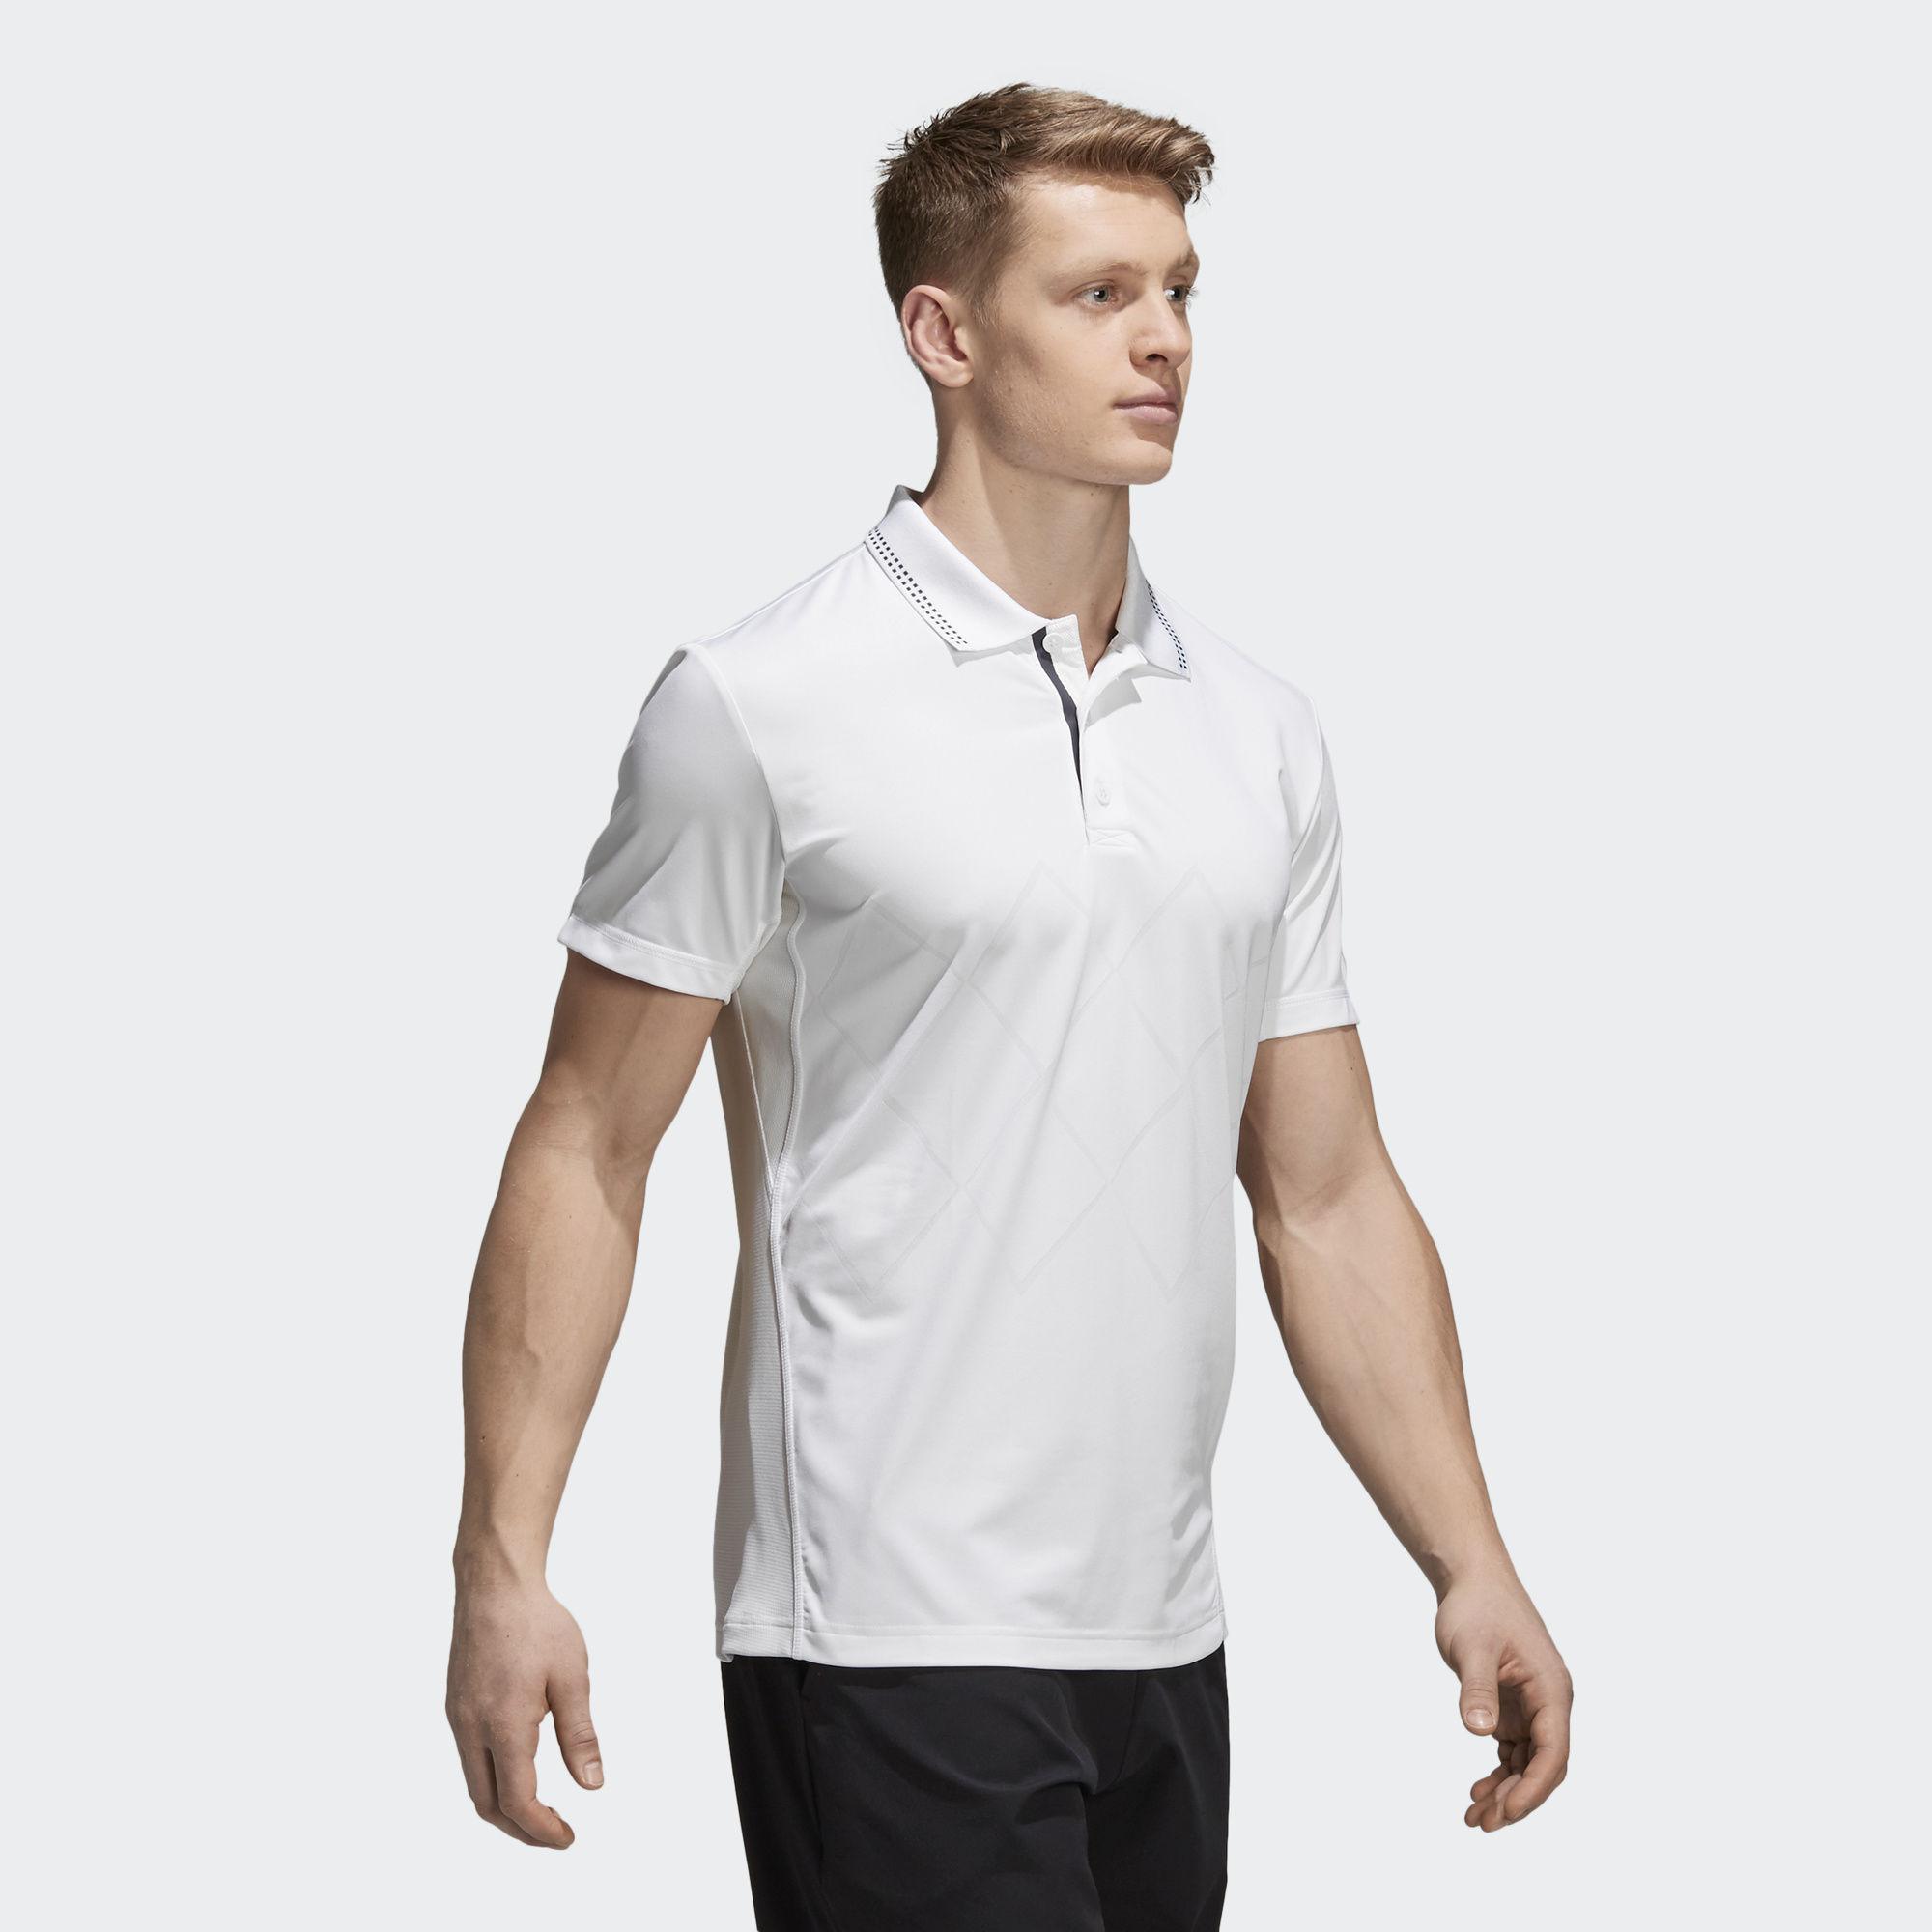 Adidas Mens Barricade Engineered Polo Shirt - White - Tennisnuts.com